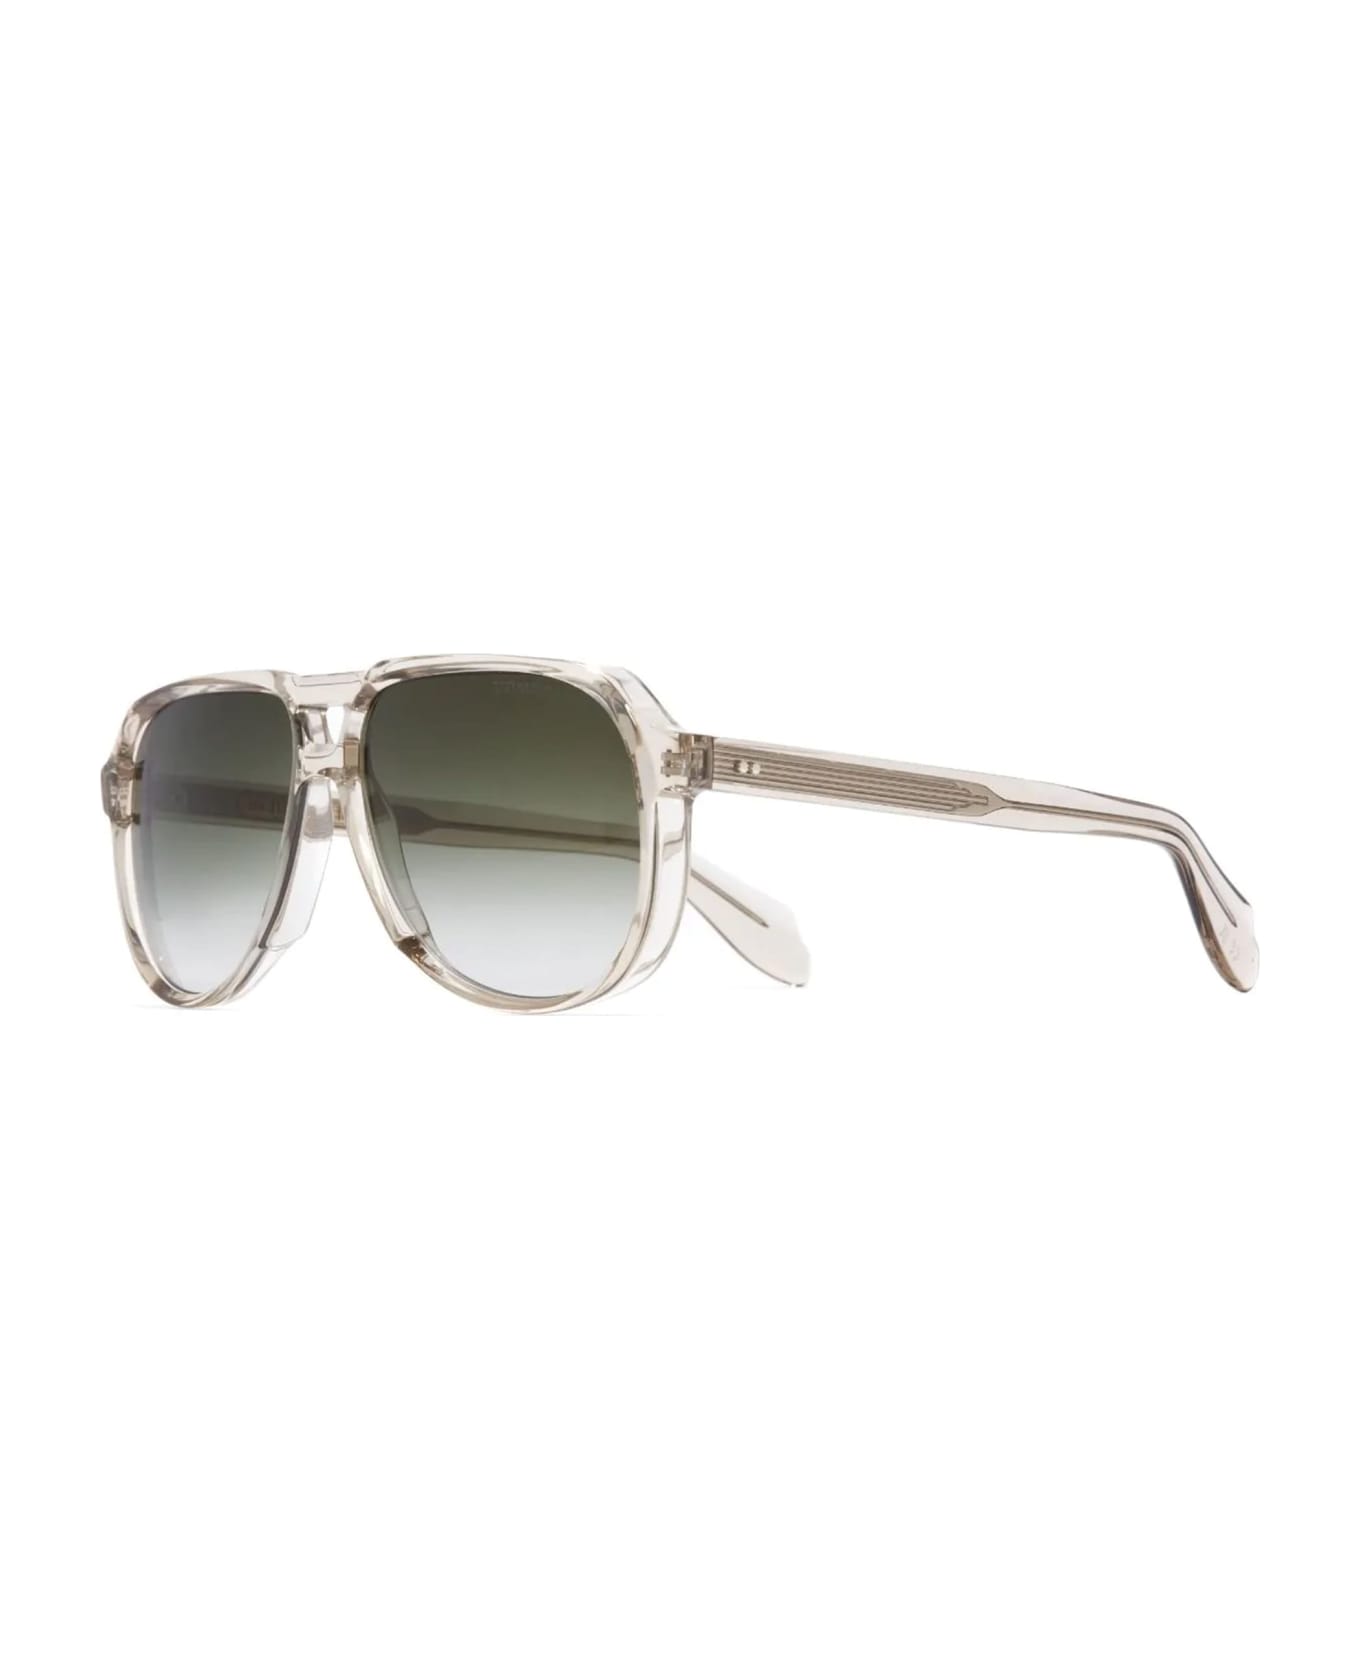 Cutler and Gross 9782-03 - Sand Crystal Sunglasses - transparent beige